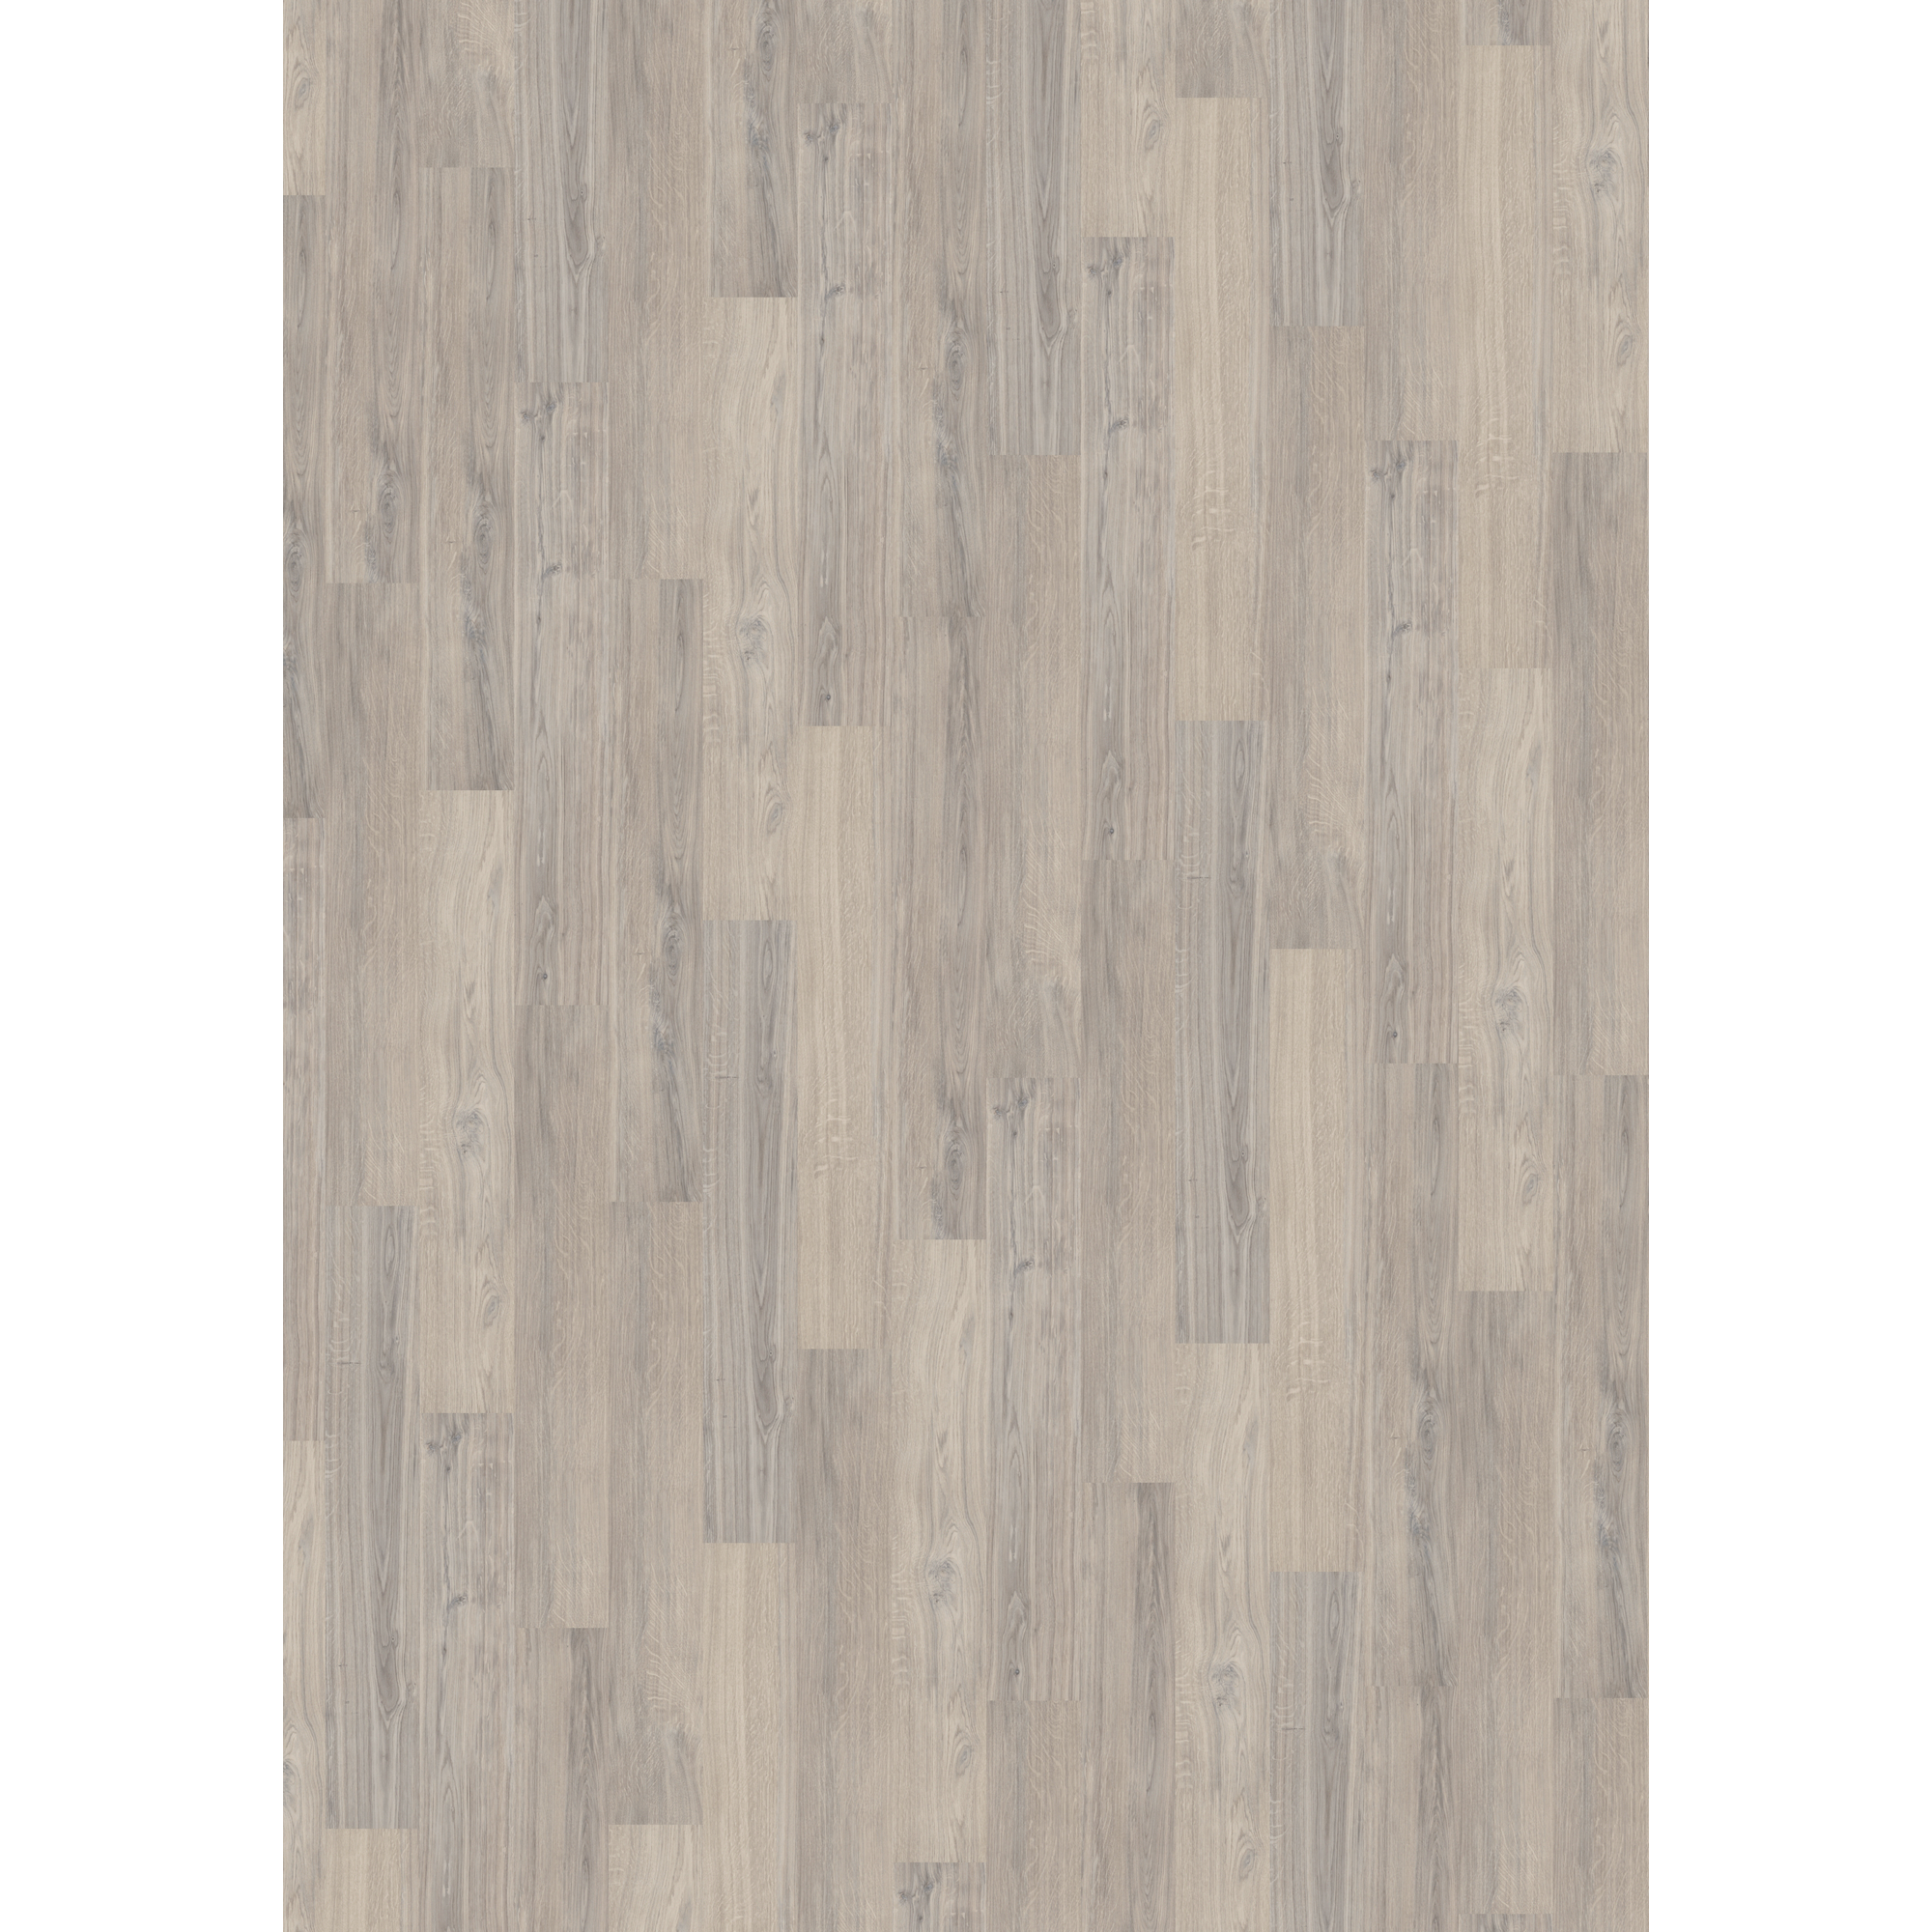 Vinylboden 'Comfort' Oiled Blossom Oak grau 10,5 mm + product picture